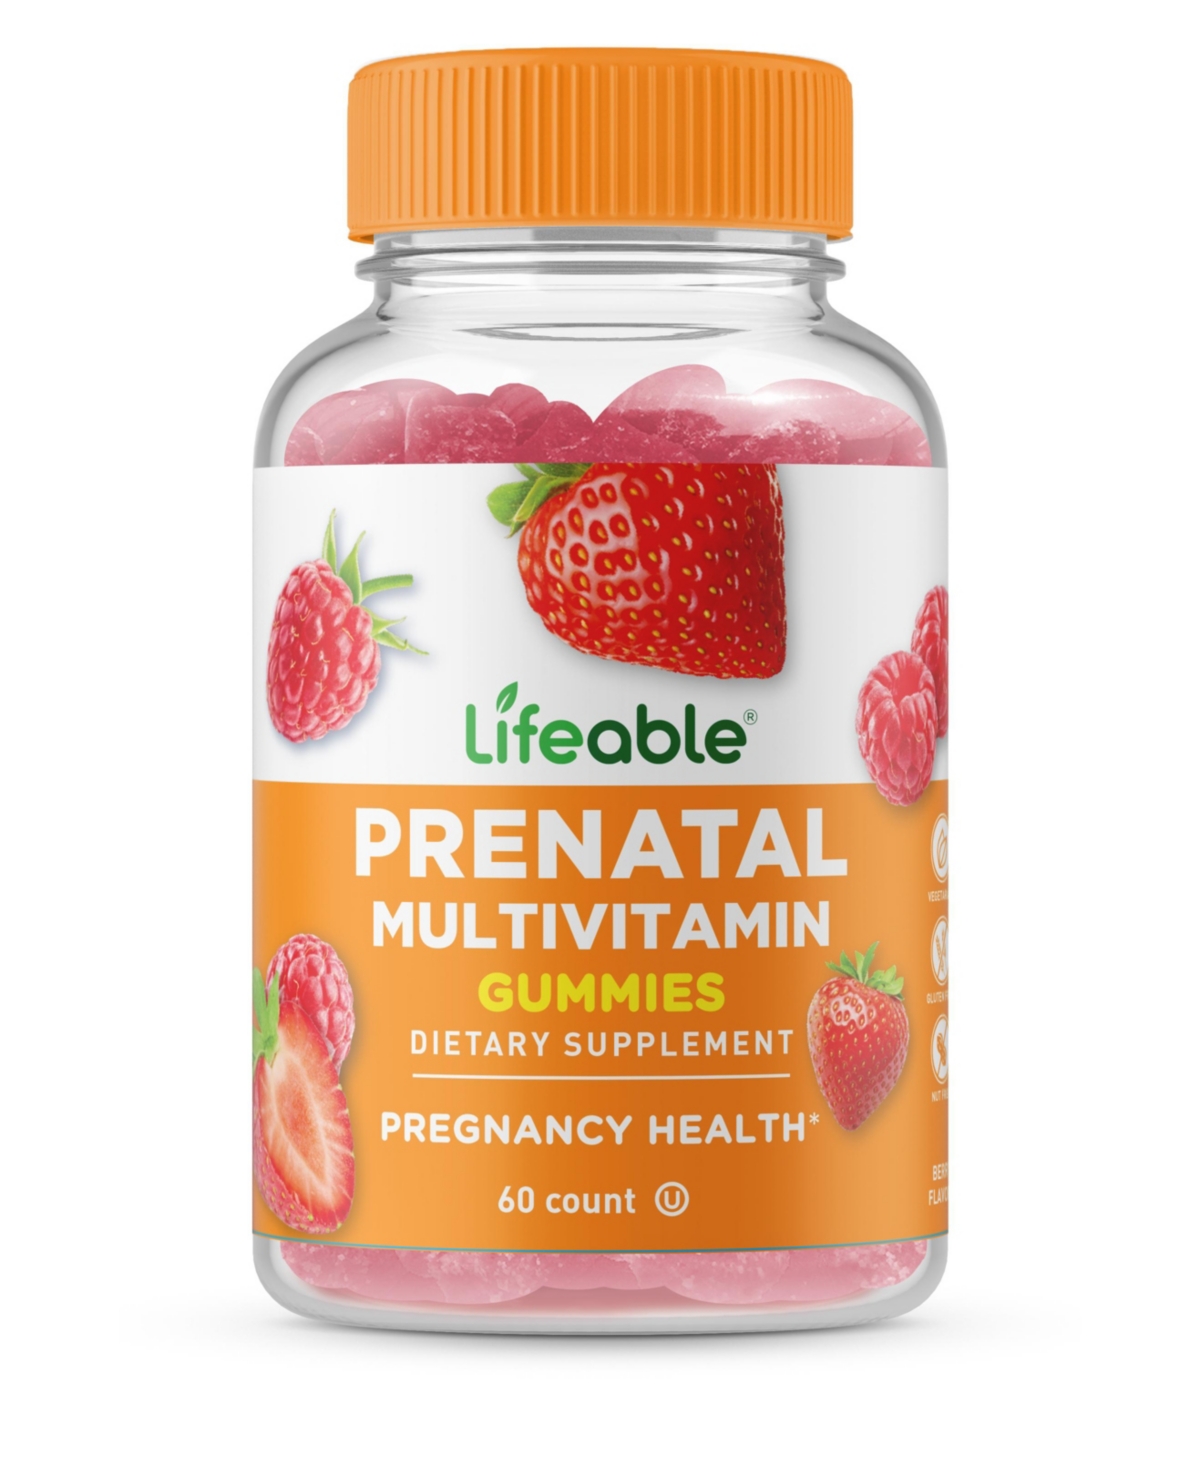 Prenatal Multivitamin Gummies - Healthy Pregnancy - Great Tasting Natural Flavor, Dietary Supplement Vitamins - 60 Gummies